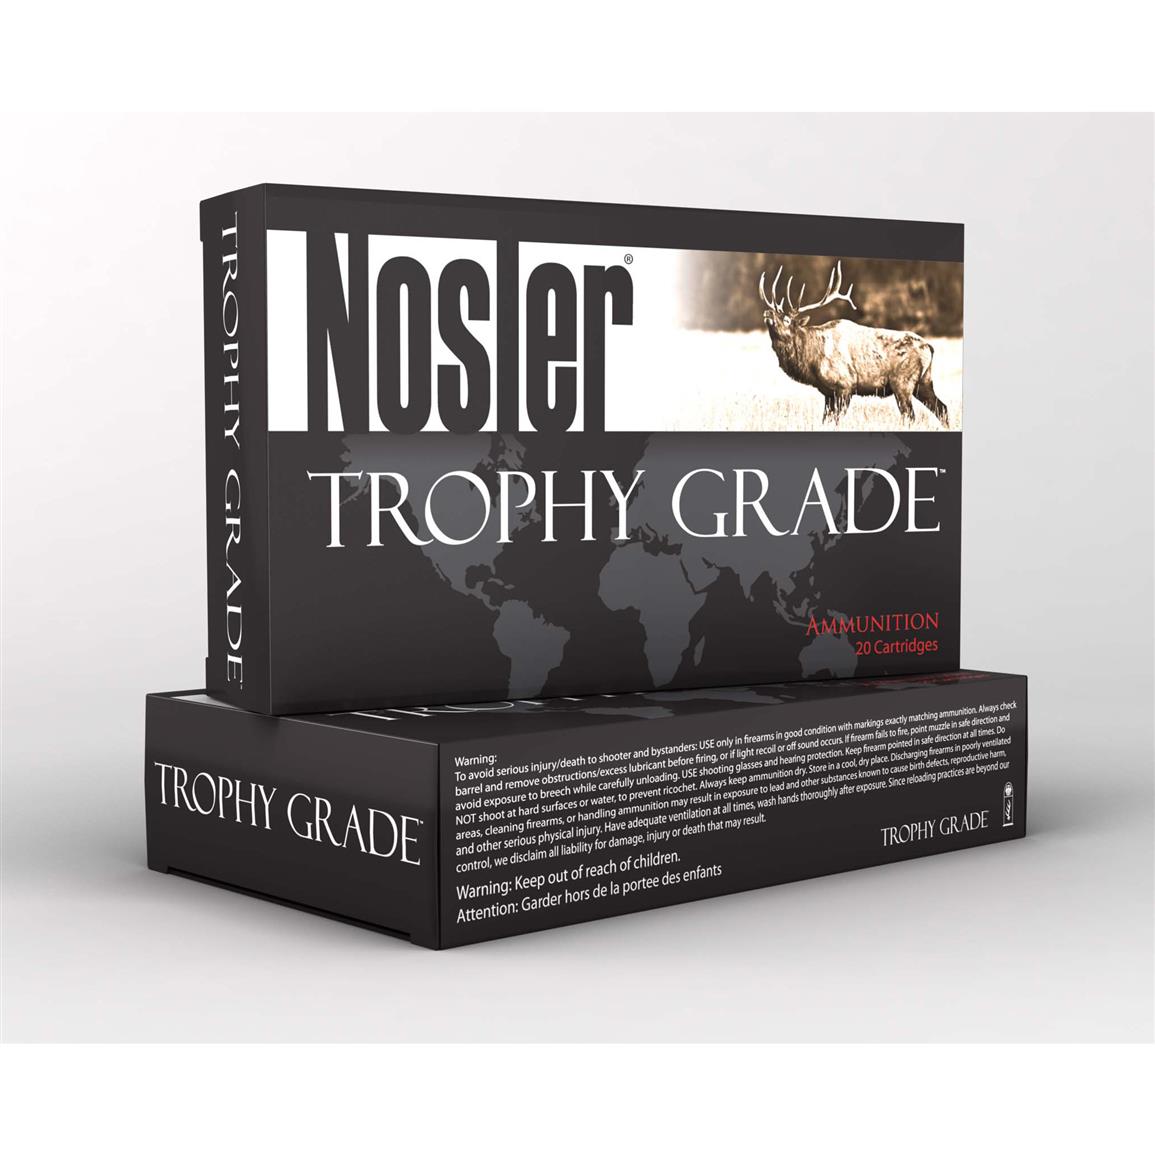 Nosler Trophy Grade, 7mm Rem. Mag., AccuBond, 140 Grain, 20 Rounds